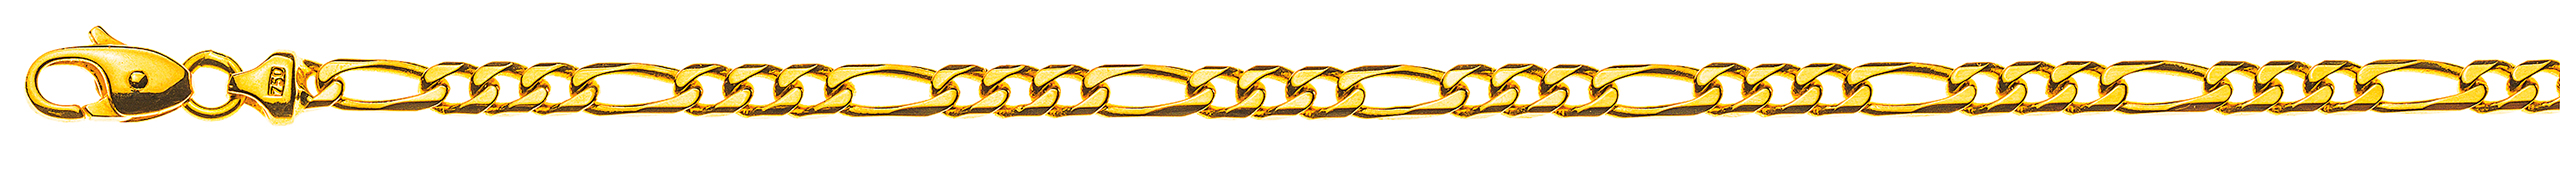 AURONOS Style Halskette Gelbgold 9K Figarokette 55cm 4mm